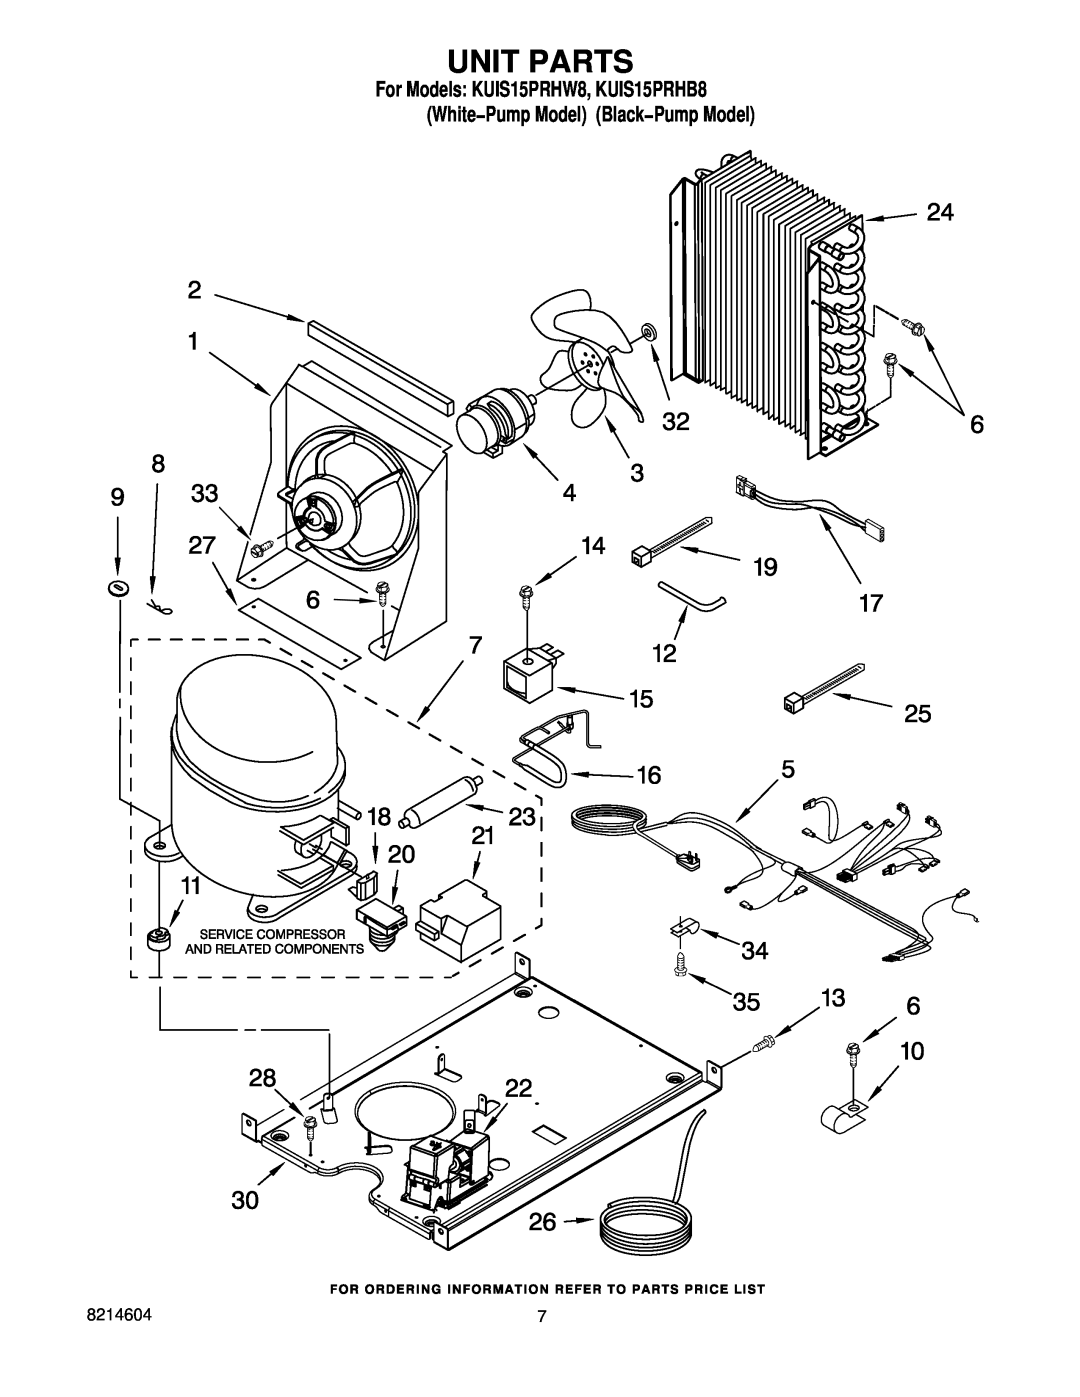 KitchenAid manual Unit Parts, For Models KUIS15PRHW8, KUIS15PRHB8 White−Pump Model Black−Pump Model 